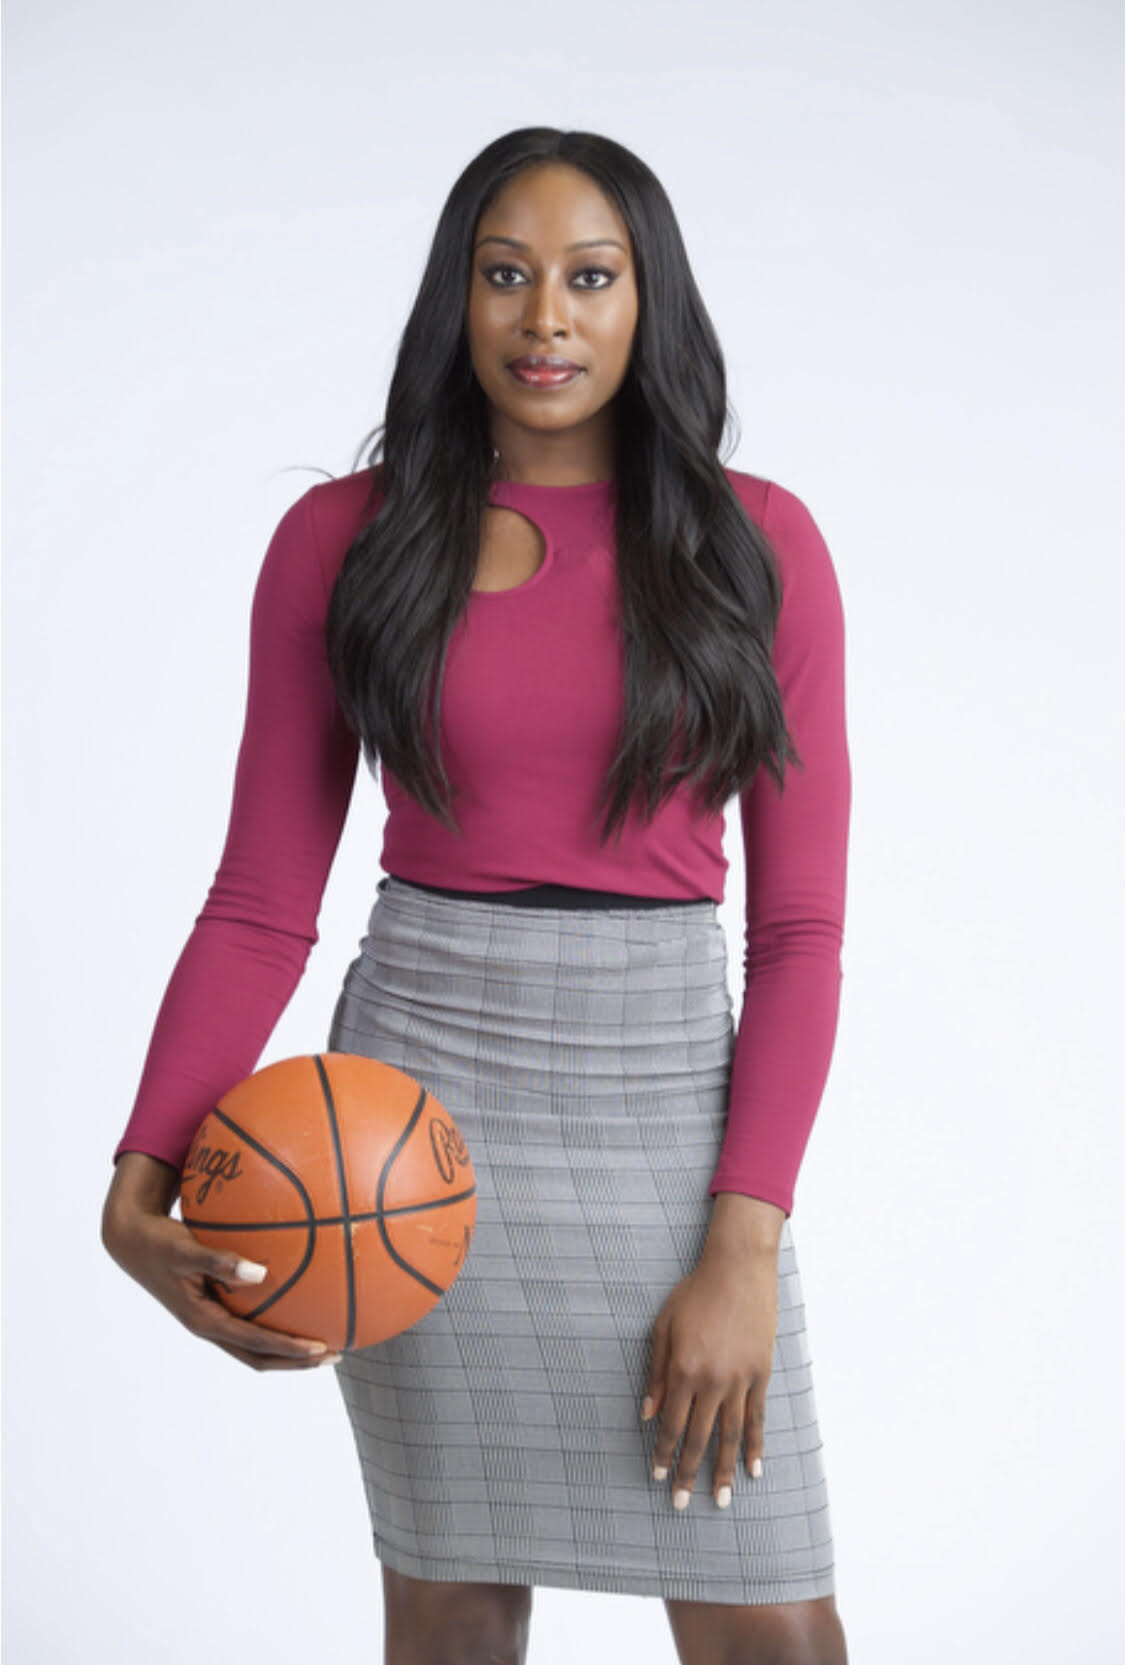 Chiney Ogwumike, WNBA All-Star, ESPN NBA Analyst